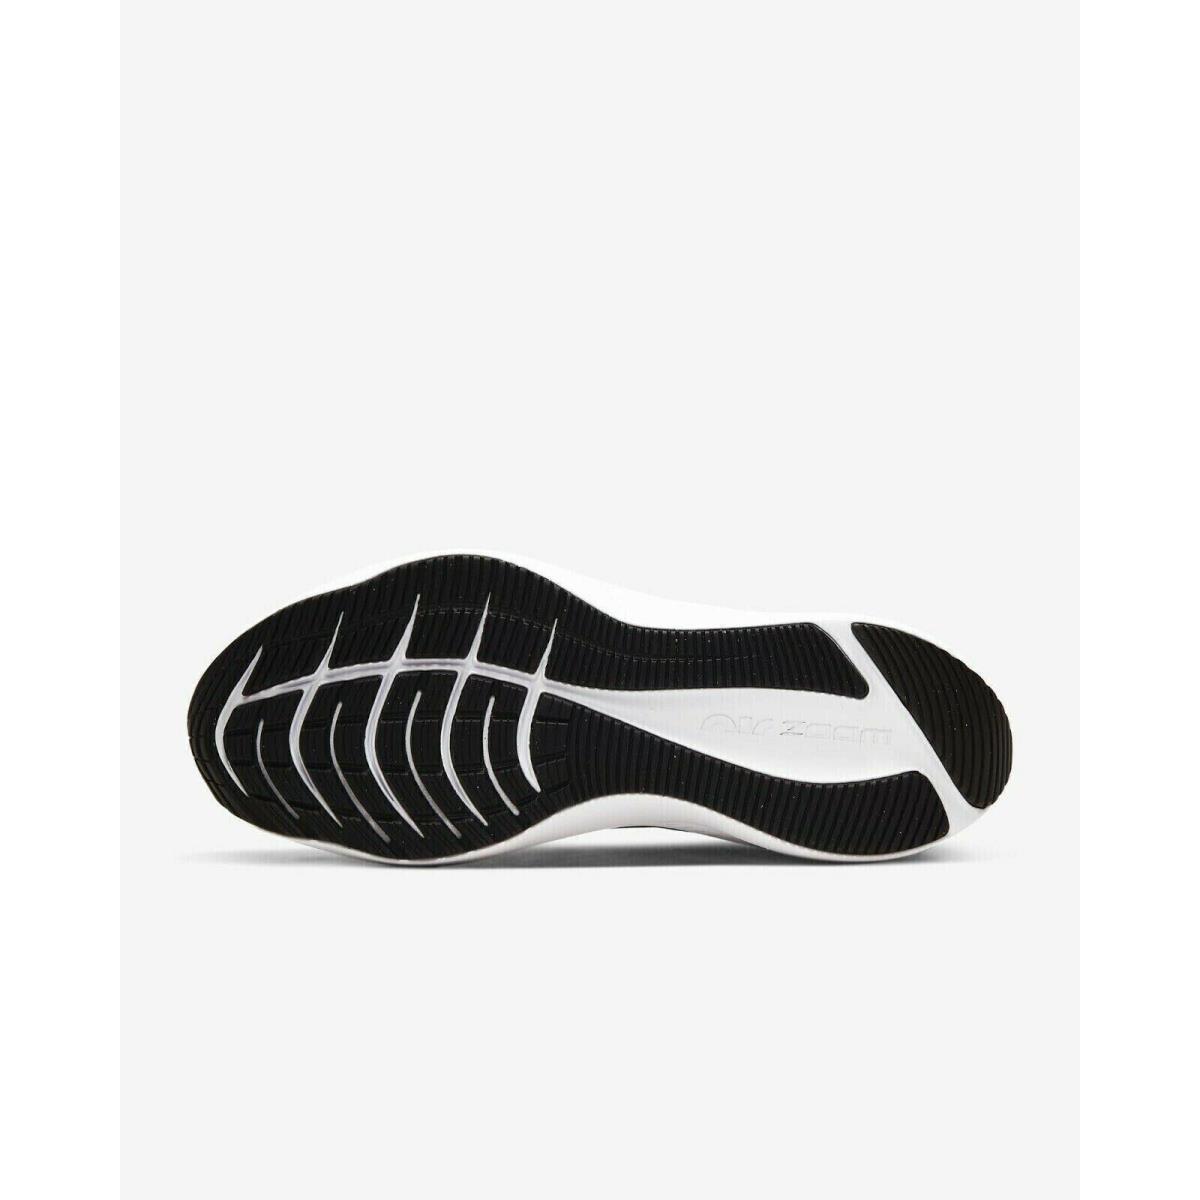 Nike shoes Zoom Winflo - Black 4